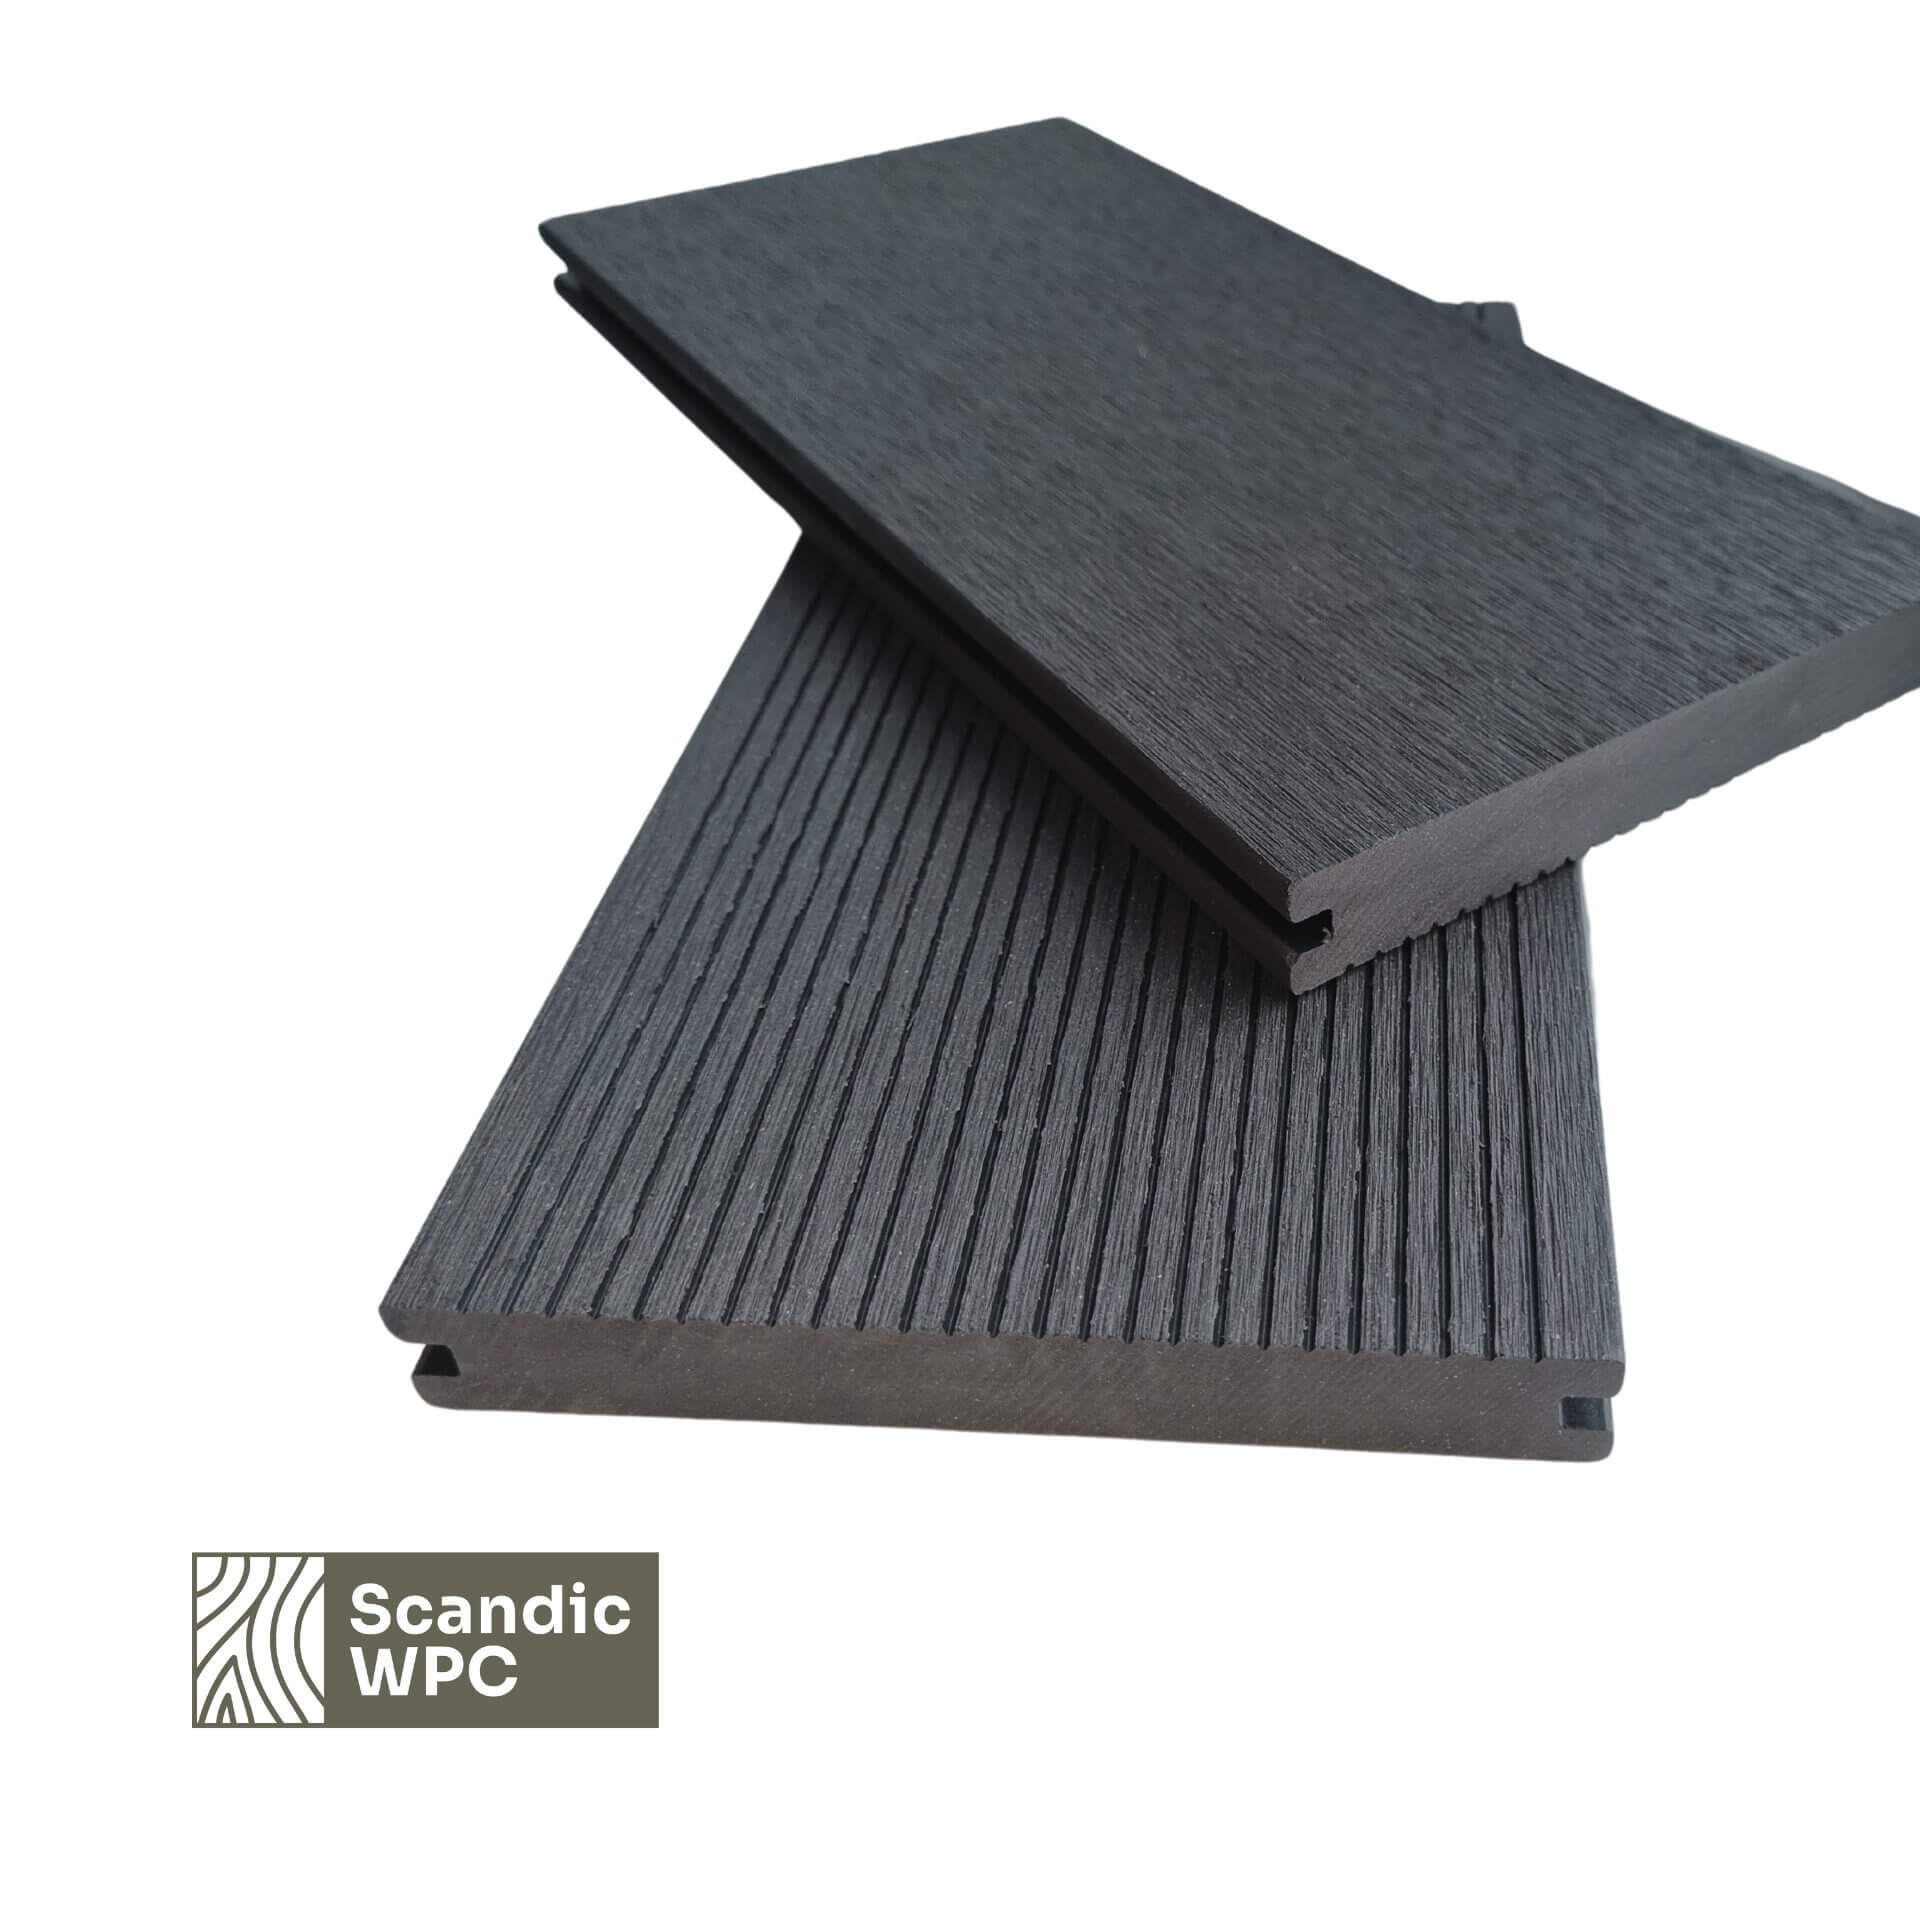 scandic wpc solid volcanic grey (1)